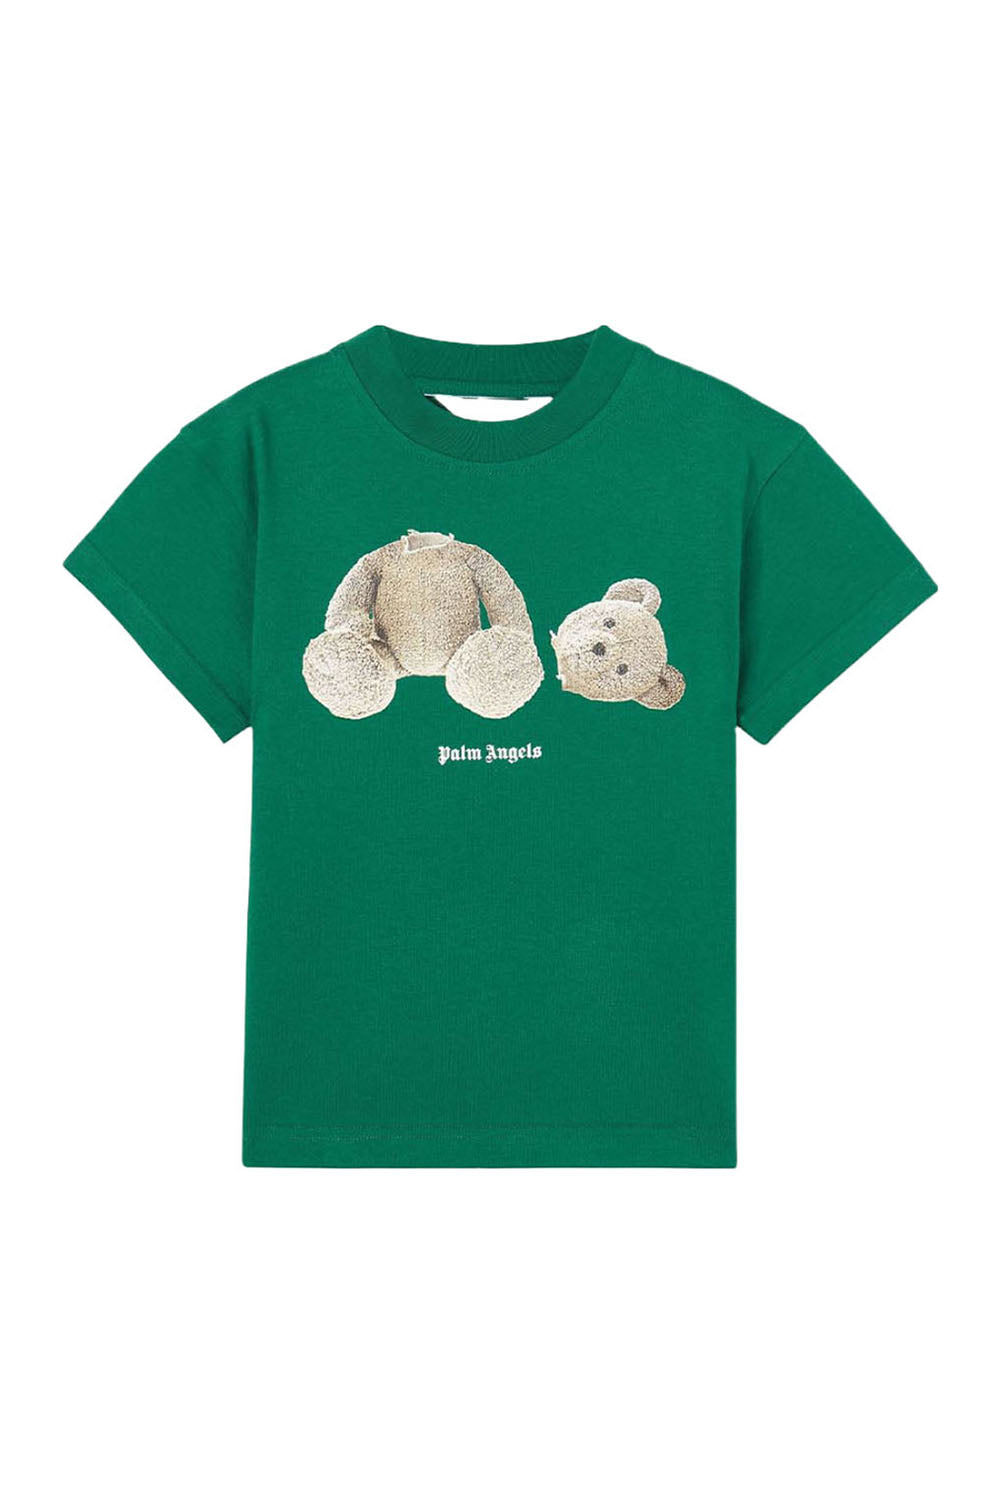 Palm Angels Bear T-Shirt - Maison7